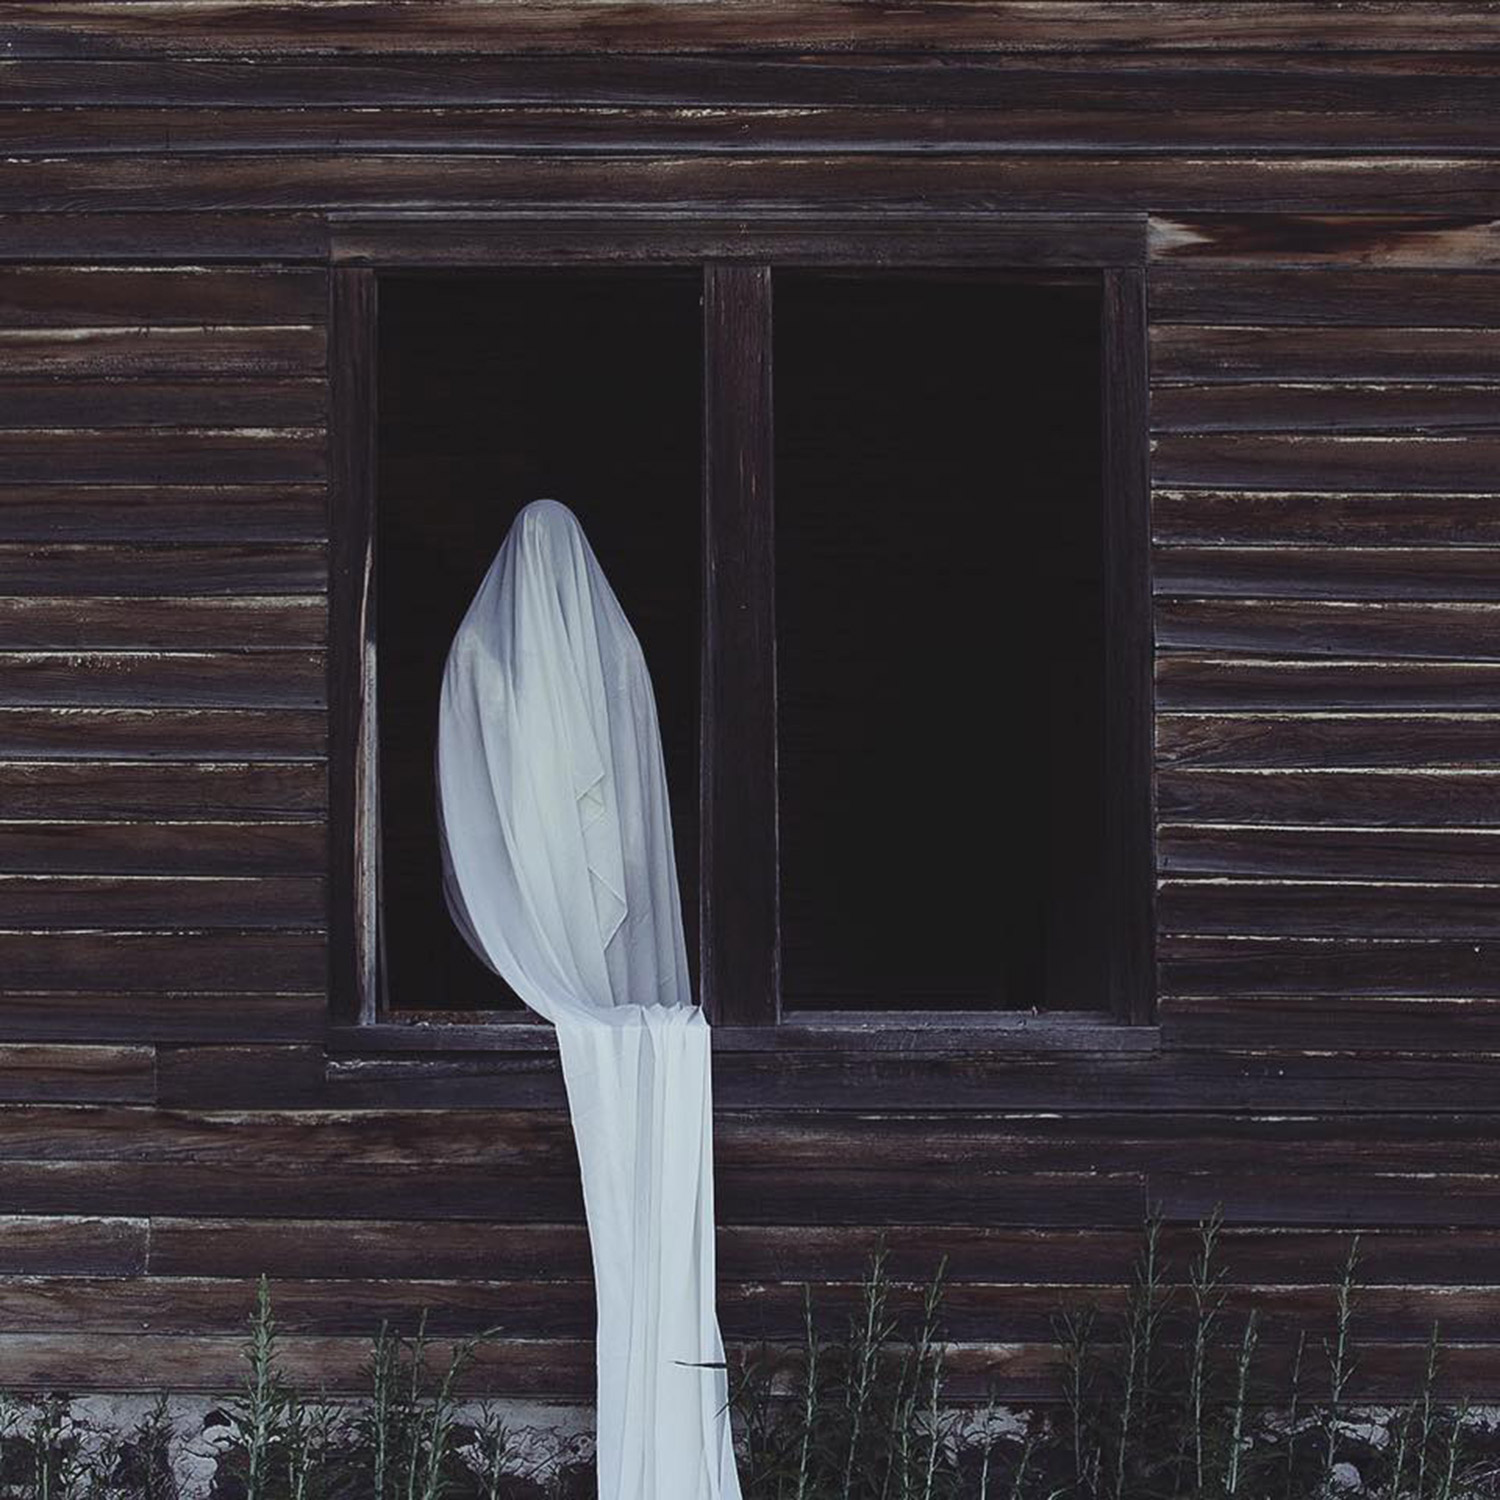 Christopher McKenney - shrouded figure in window